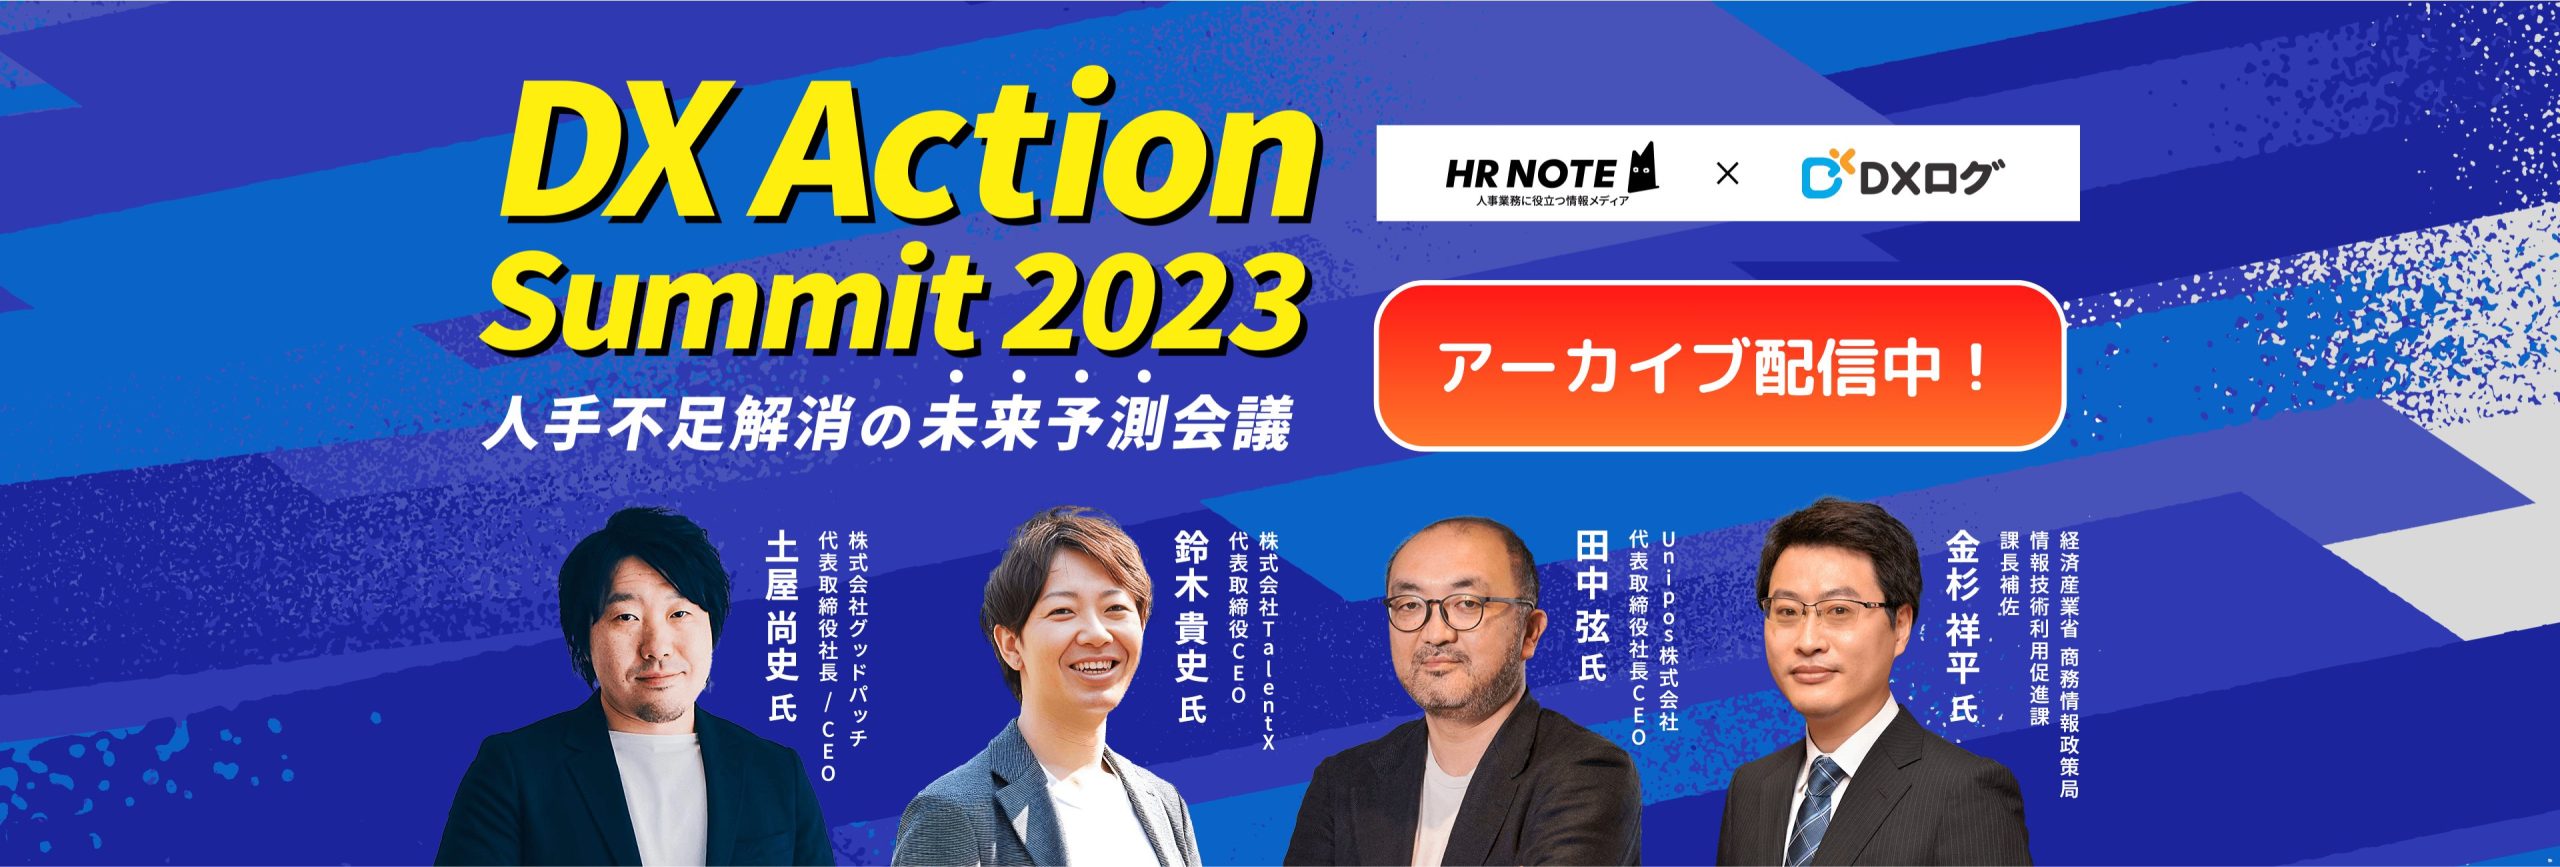 DX Action Summitアーカイブ配信用MV